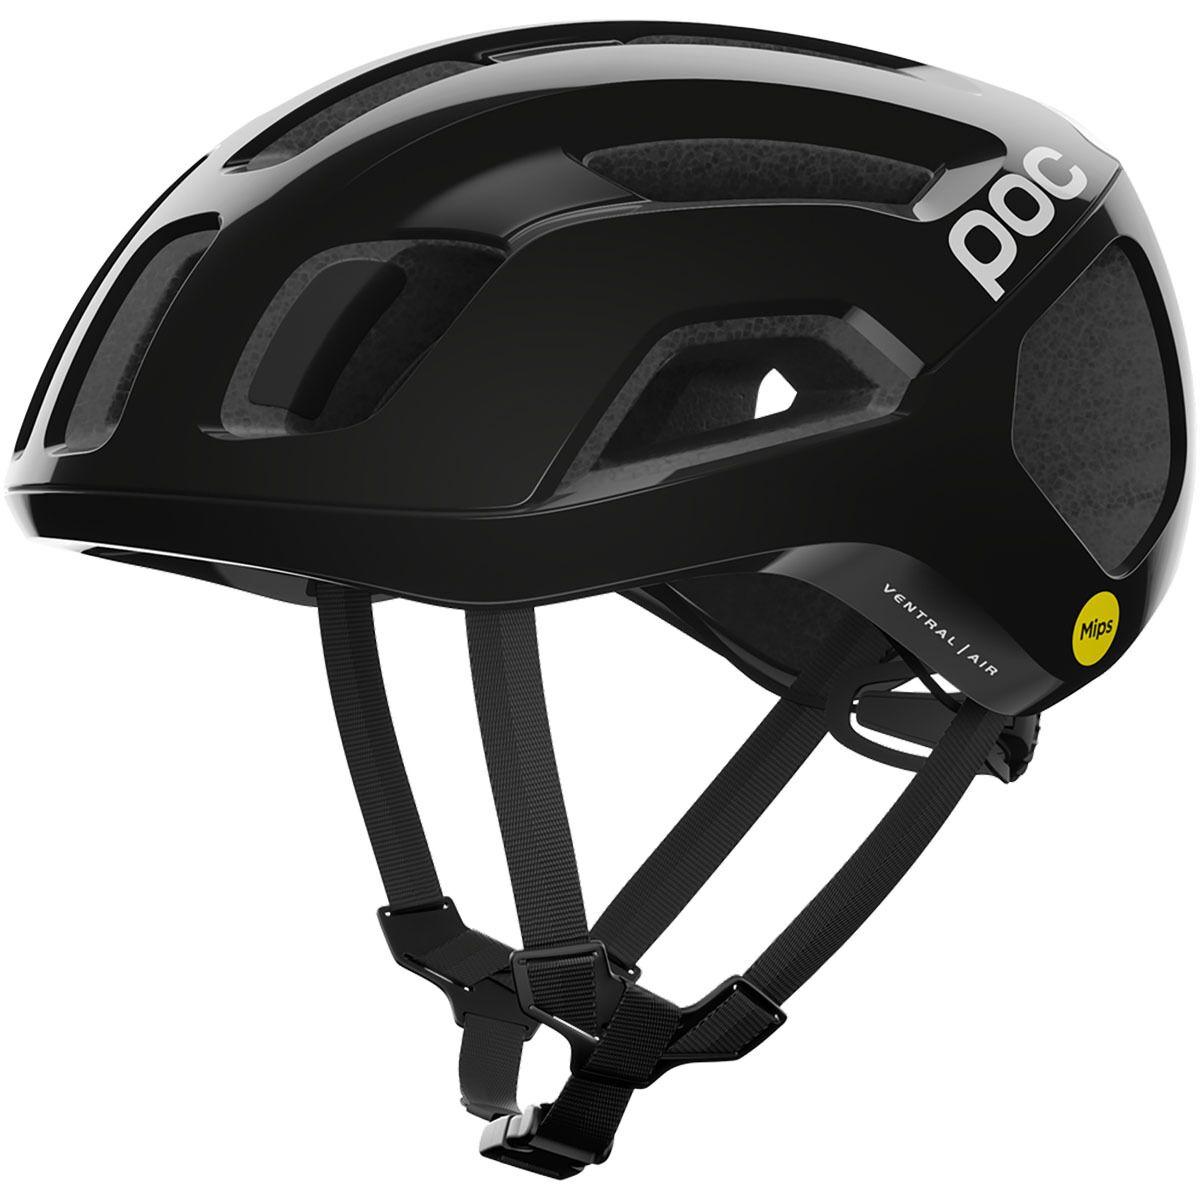 Photos - Protective Gear Set ROS Ventral Air Mips Helmet 